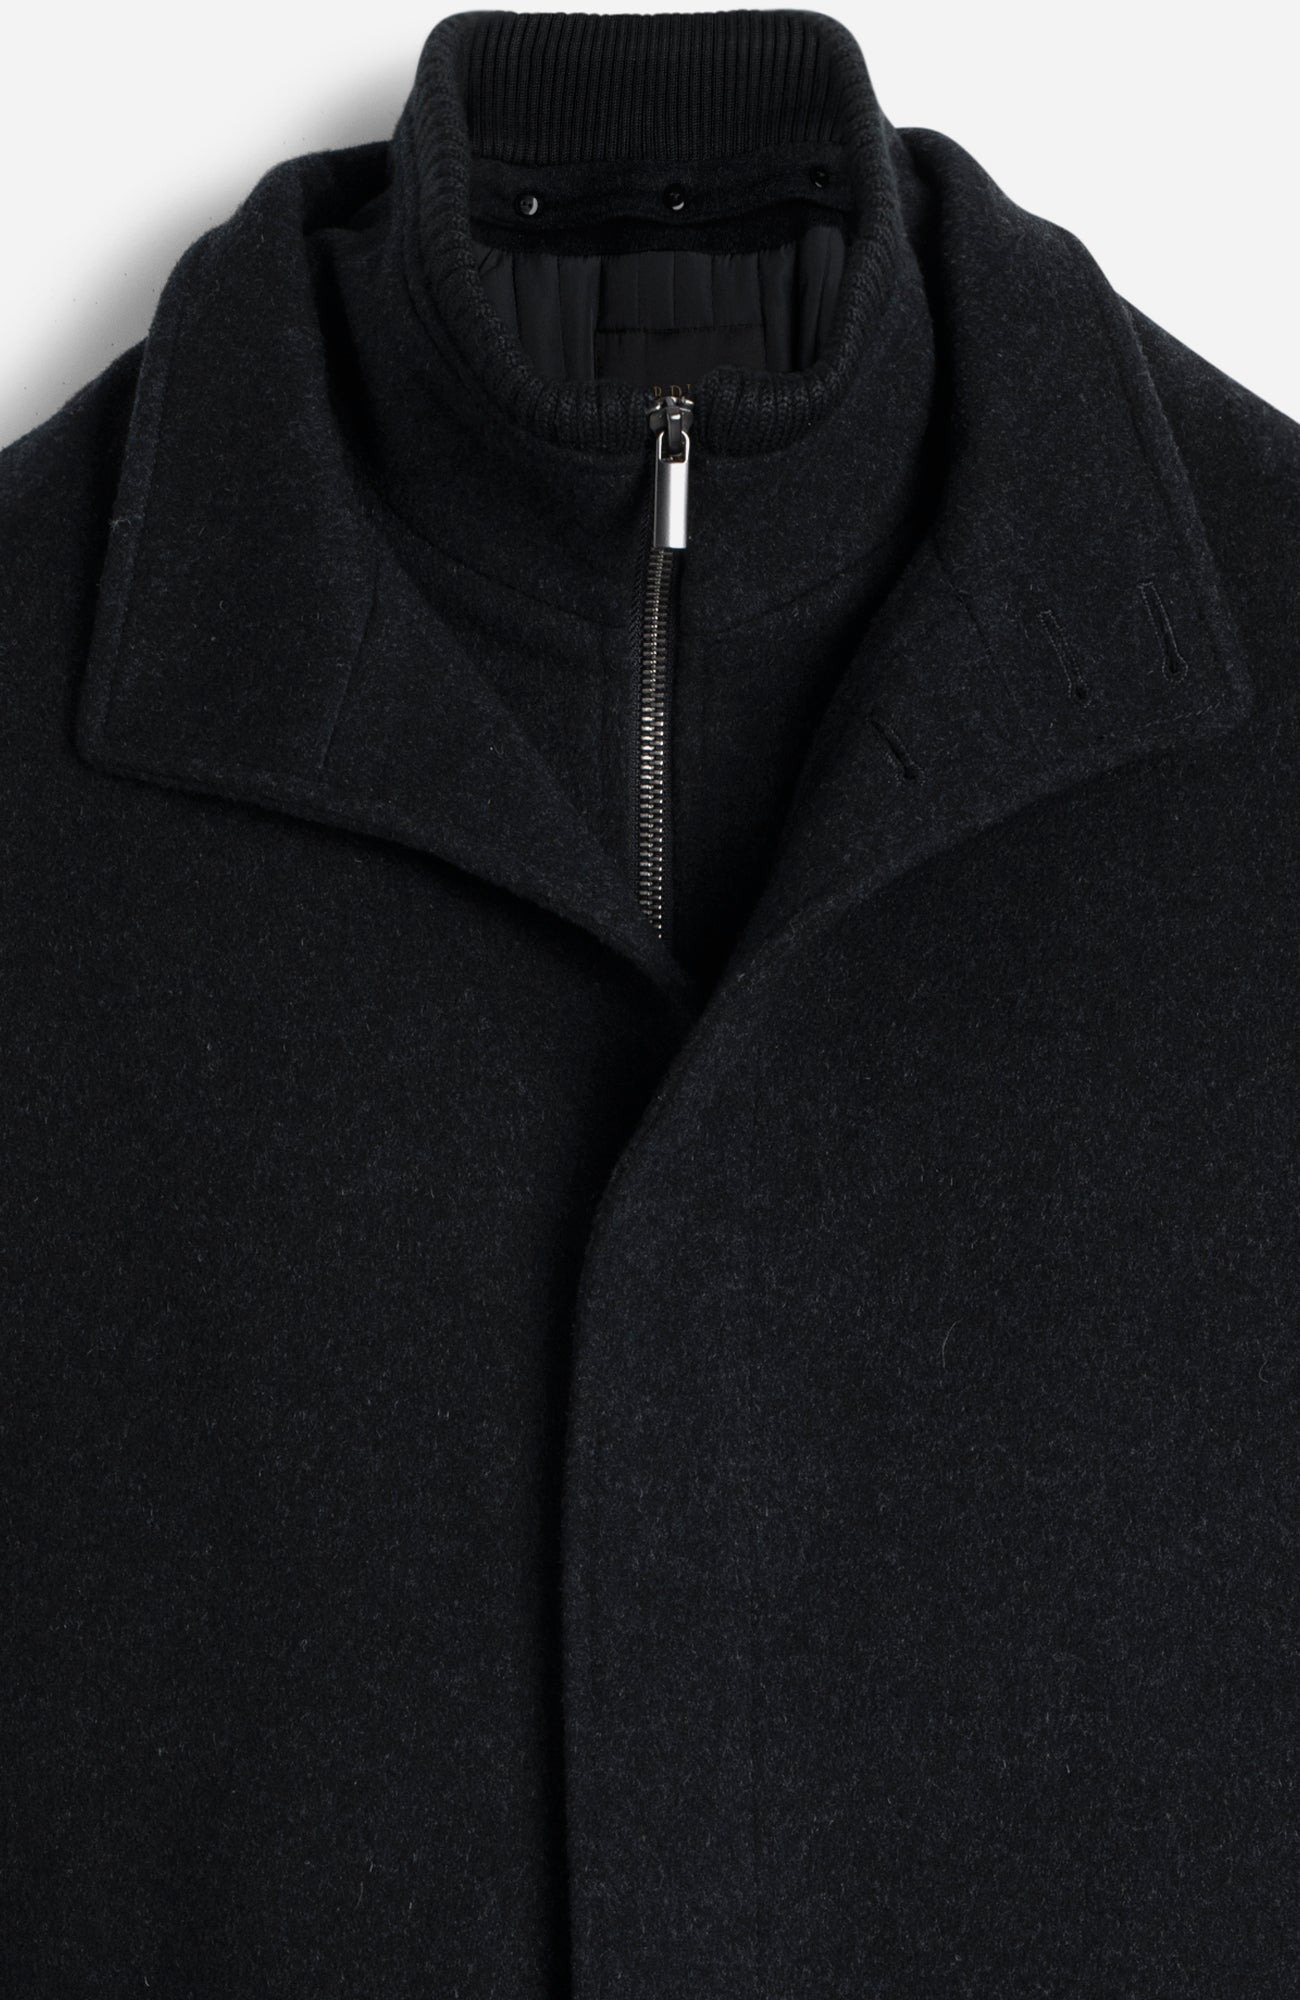 MONT-ROYAL BLACK WOOL & CASHMERE CAR COAT - Cardinal of Canada-CA - Mont-Royal black wool cashmere car coat 34 inch length